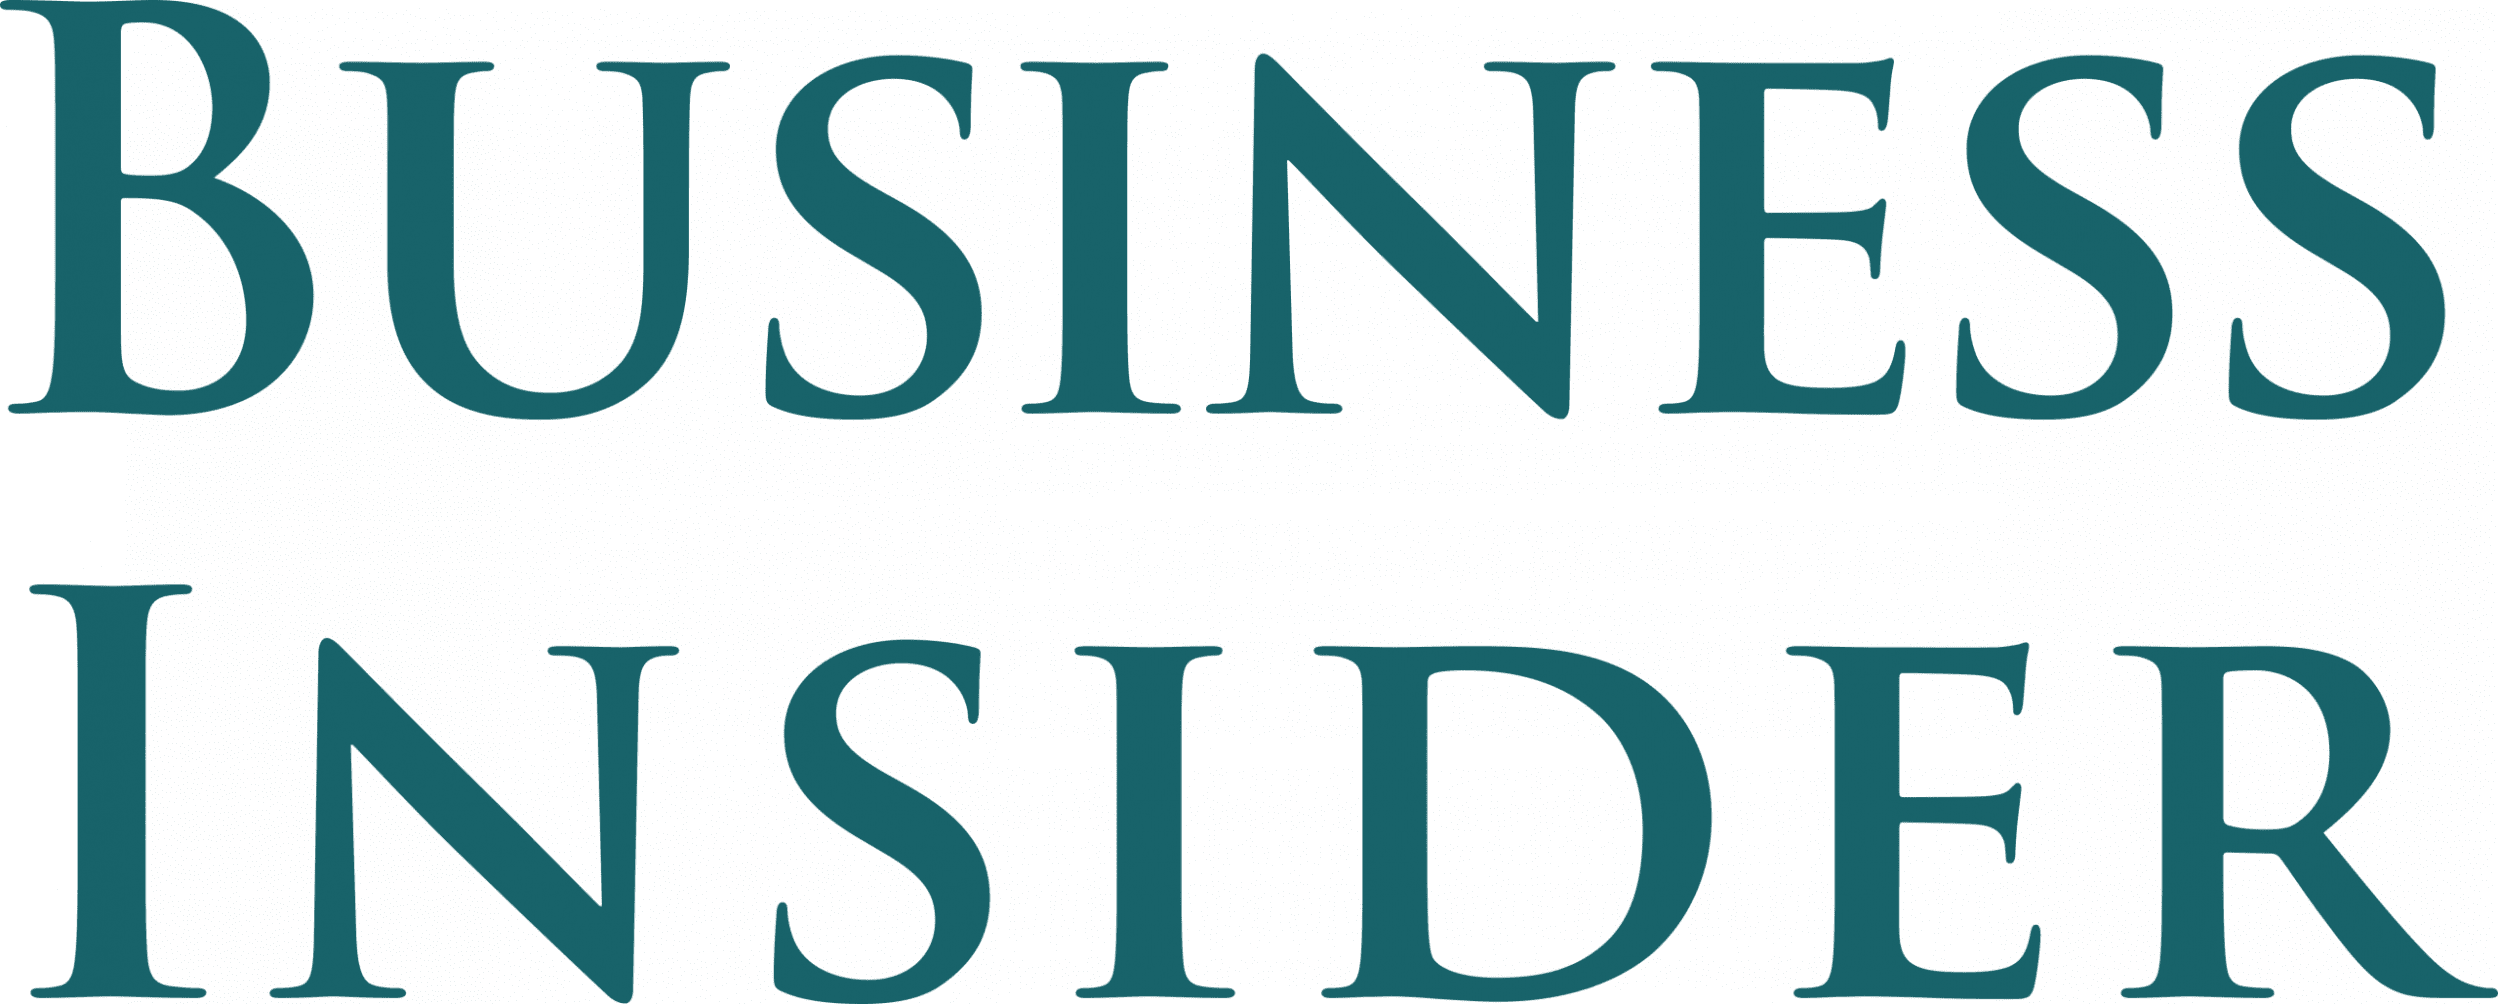 https://celinnedacosta.com/wp-content/uploads/2022/06/Business_Insider_Logo-scaled-1.png